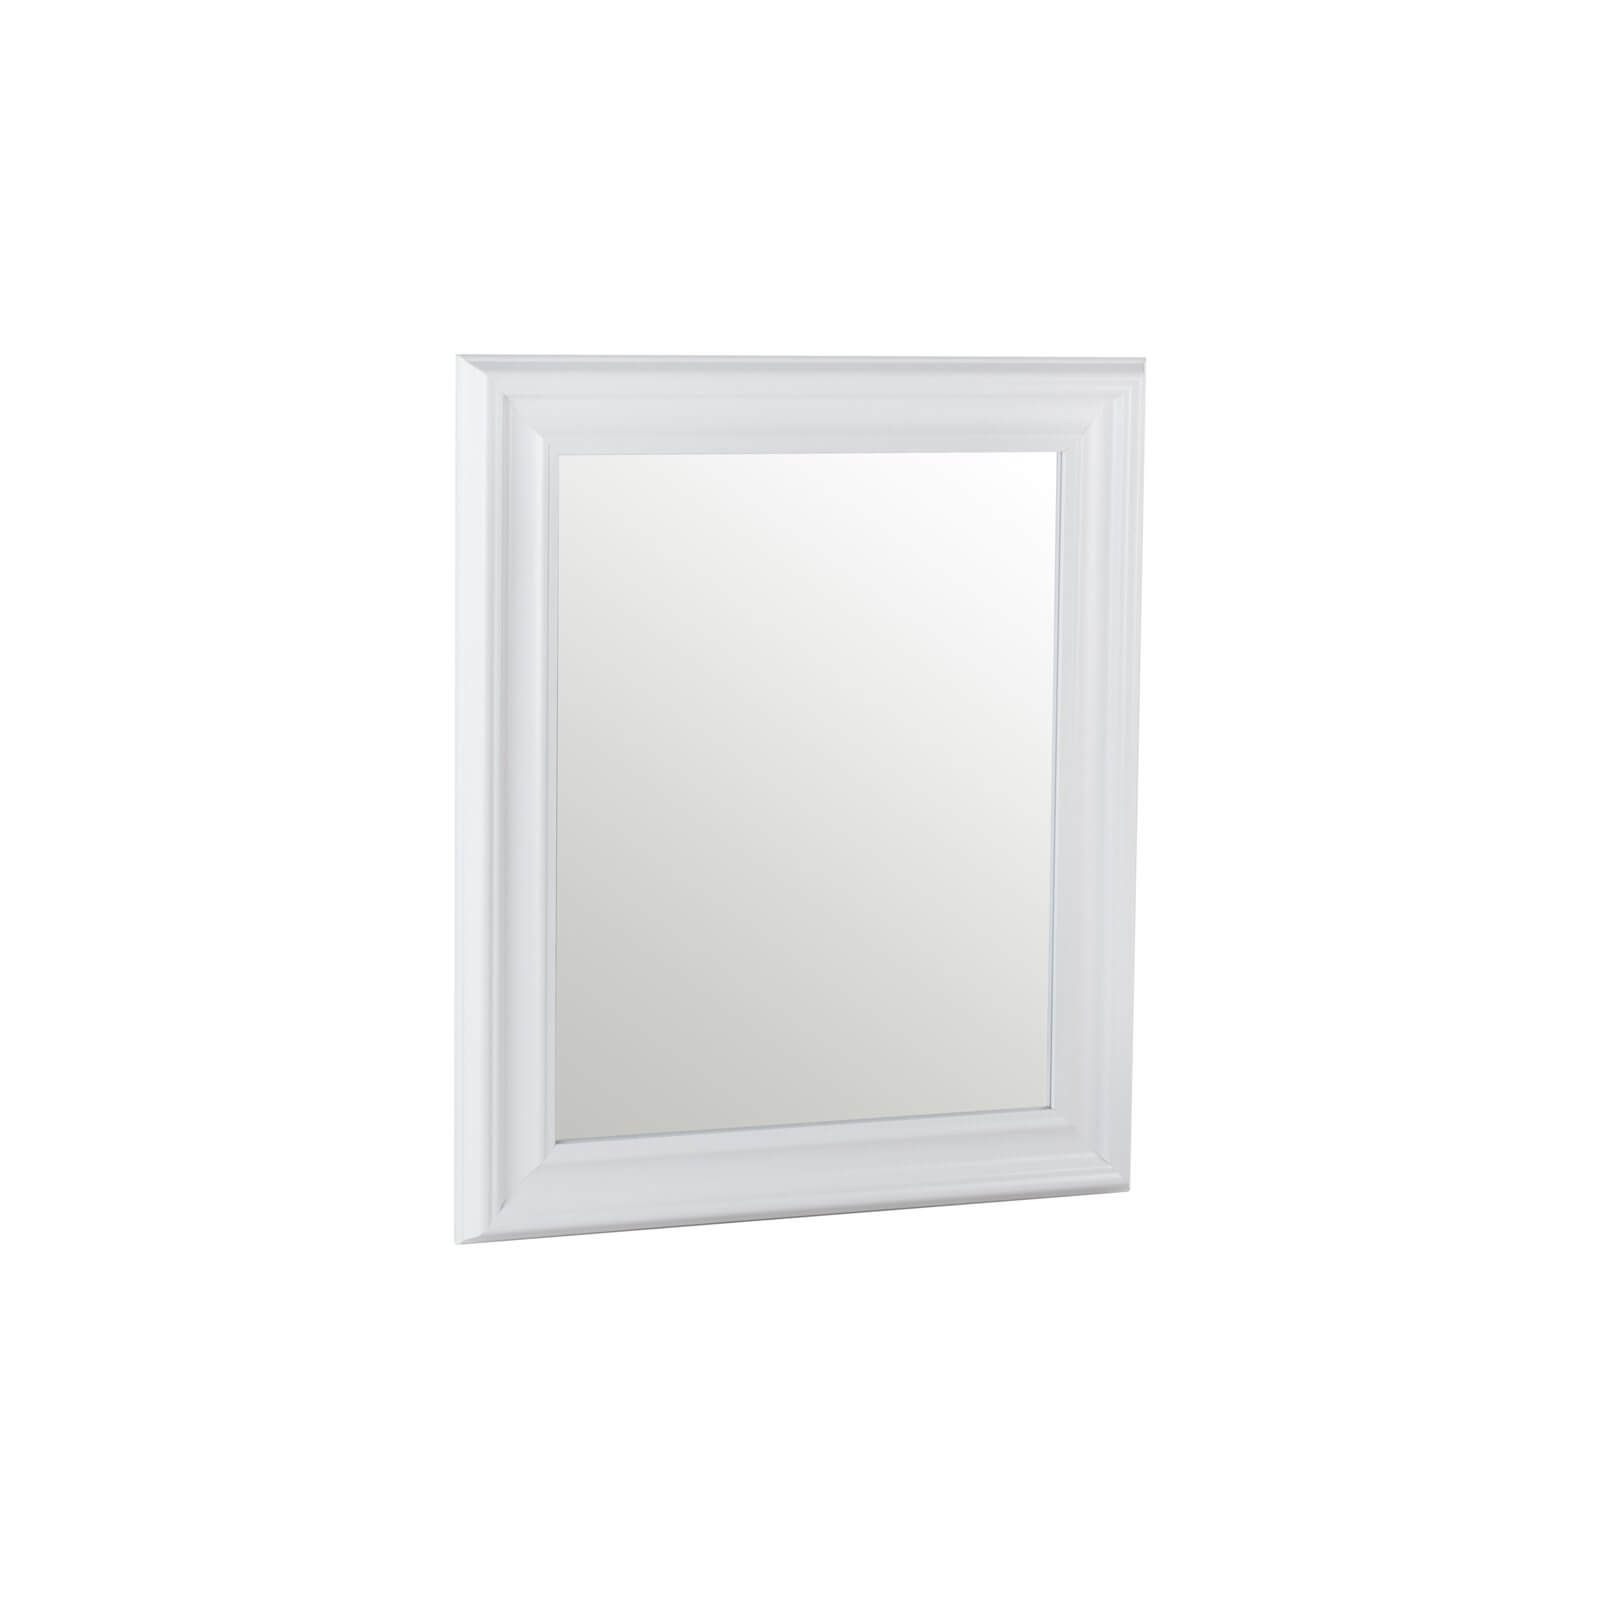 Croft Framed Mirror White 53x63cm